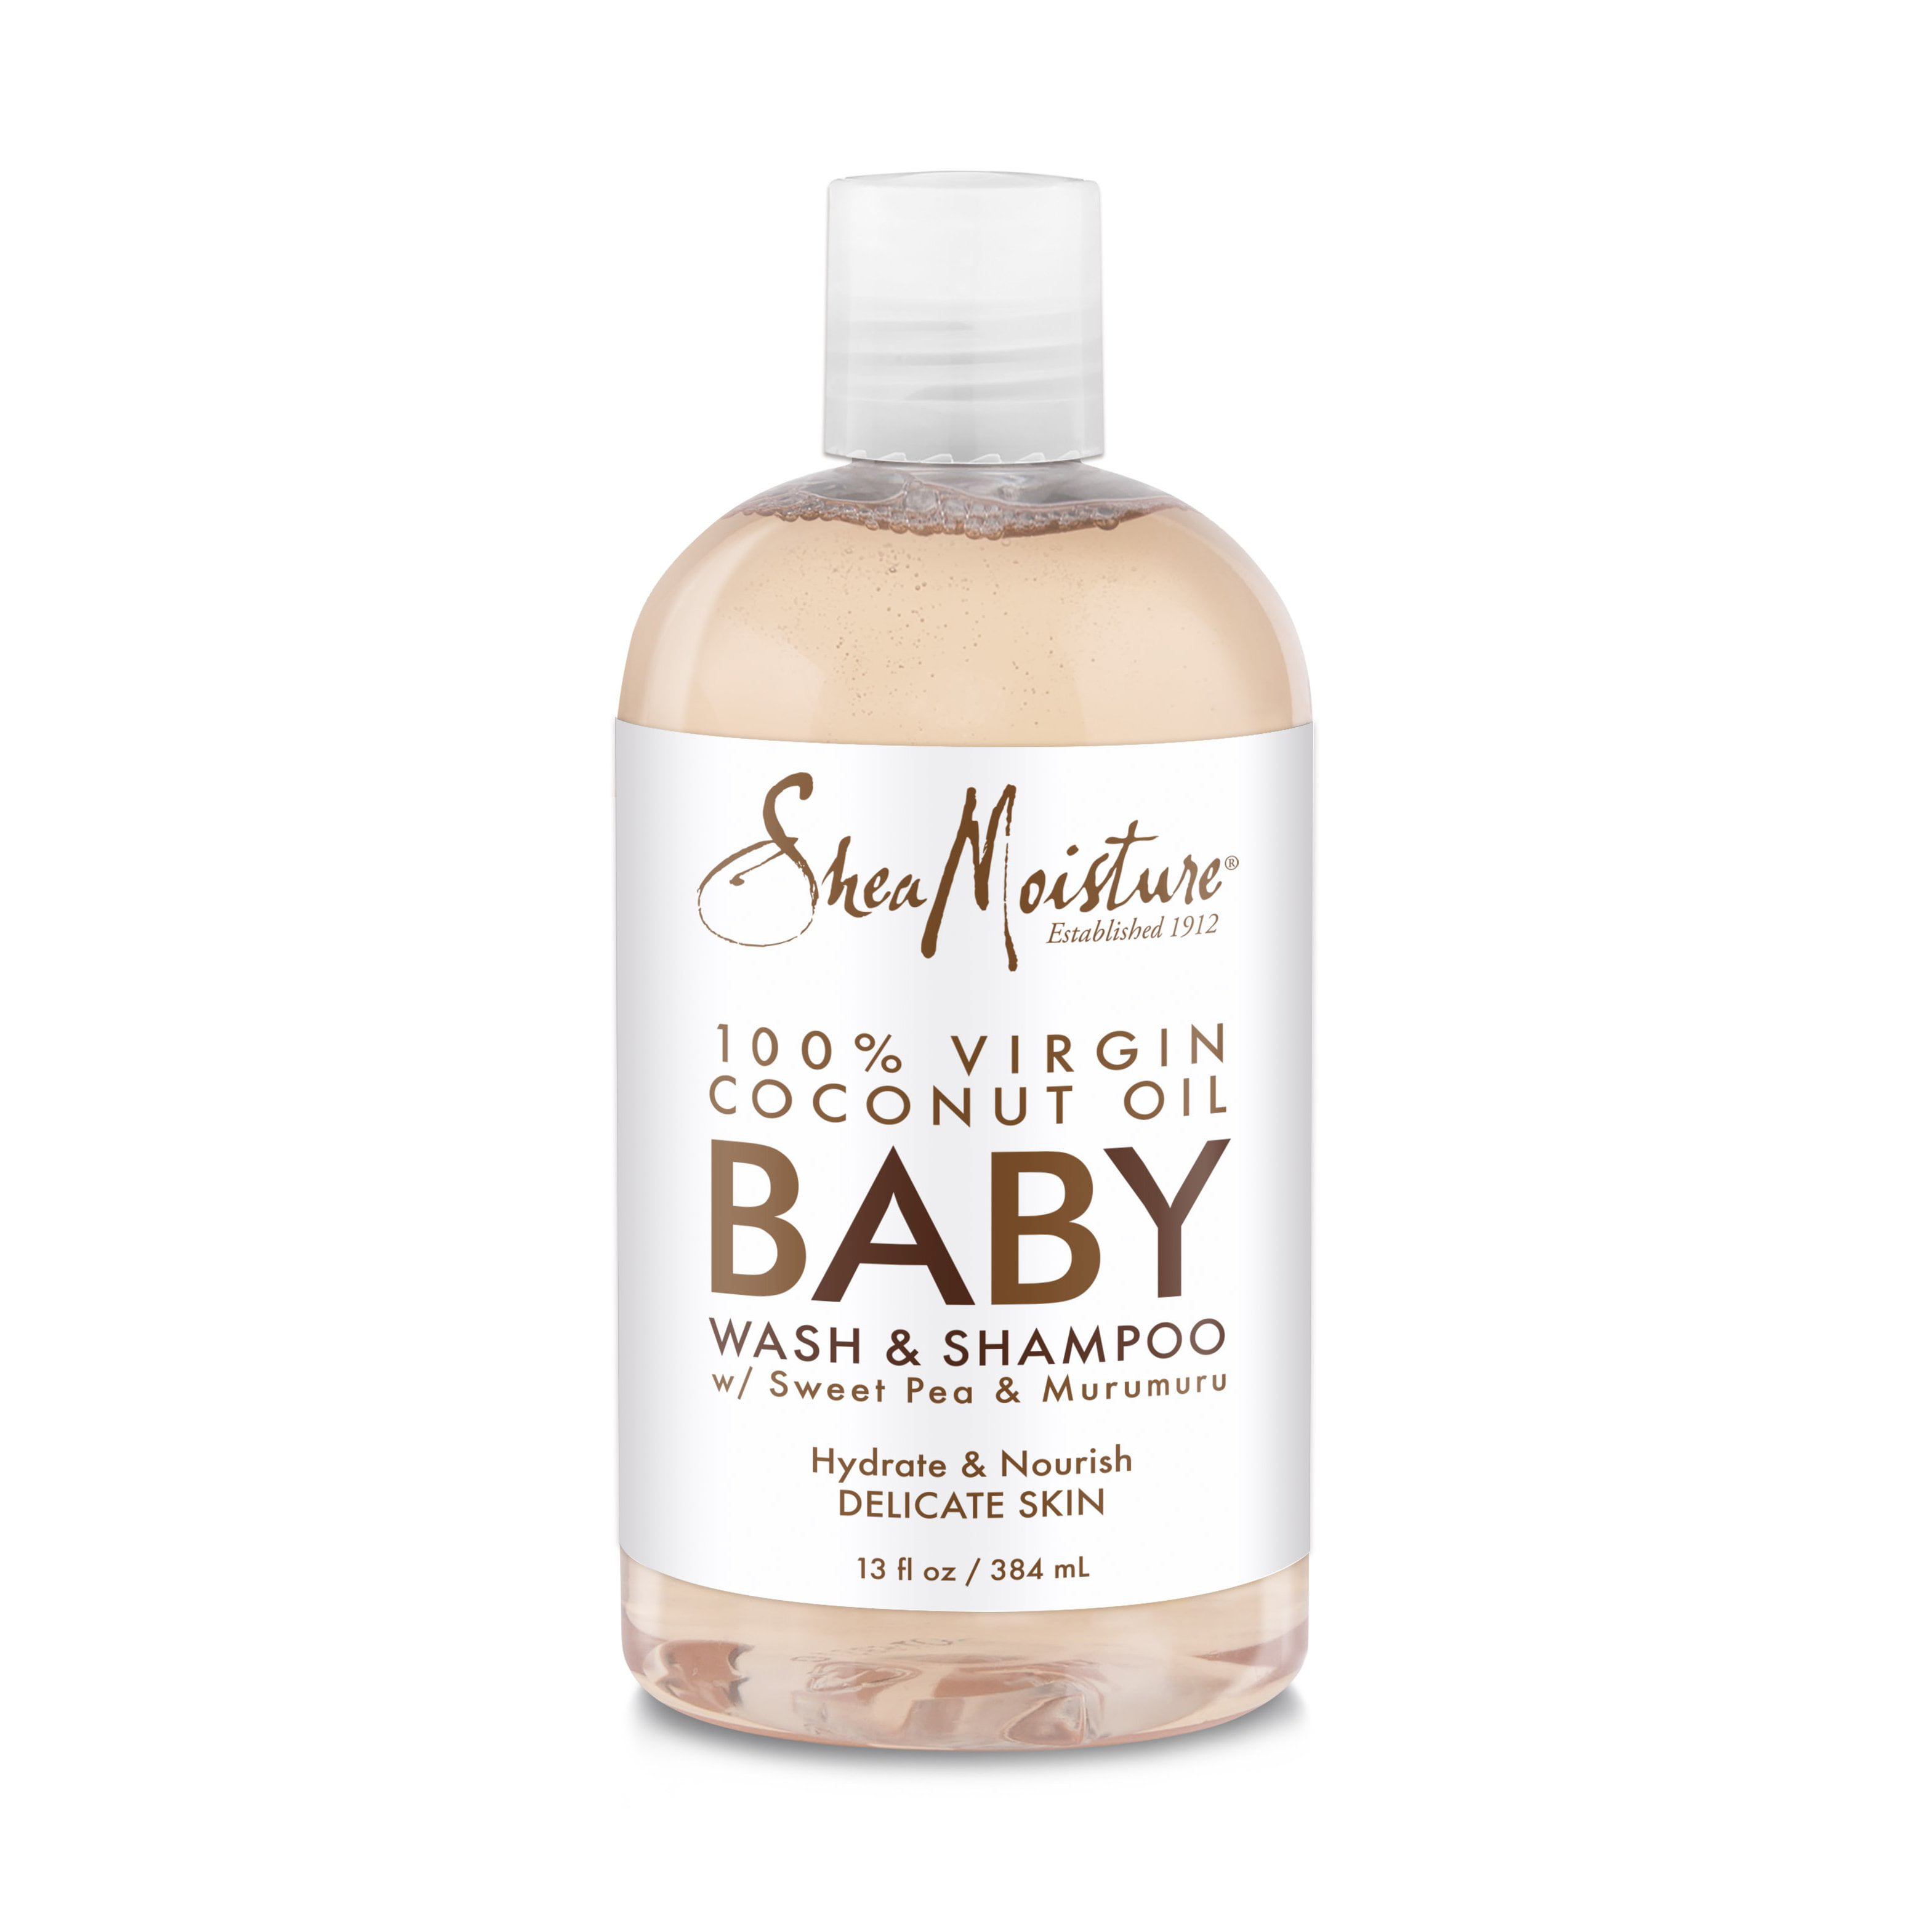 shea moisture baby lotion coconut